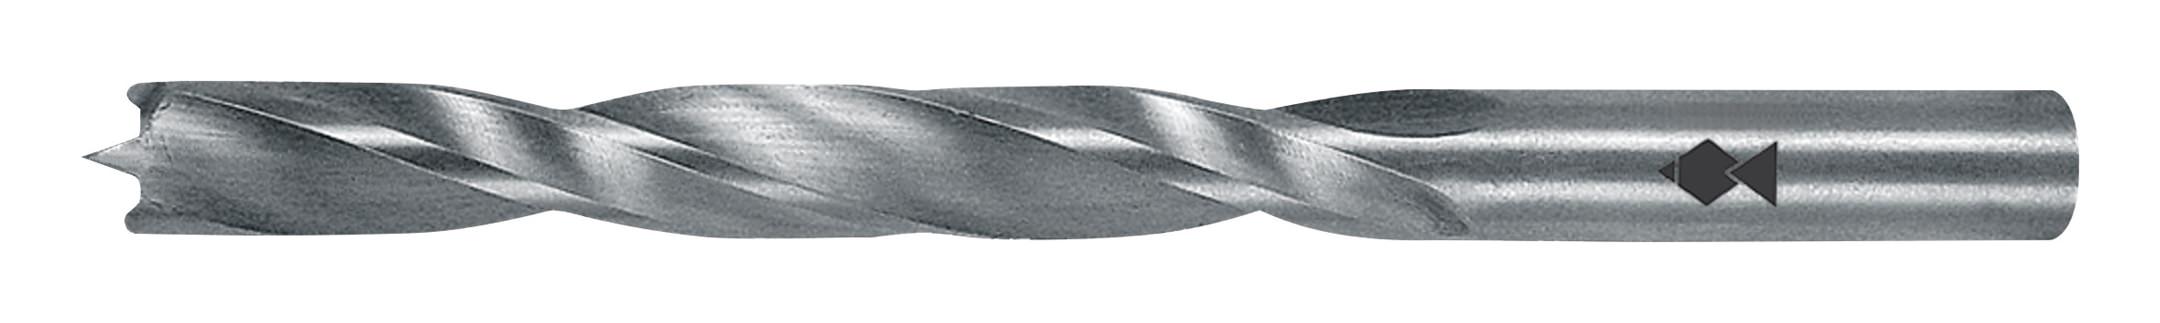 Fisch Holzspiralbohrer HSS R Profi 10 x 70 013C100110 110mm S10mm 